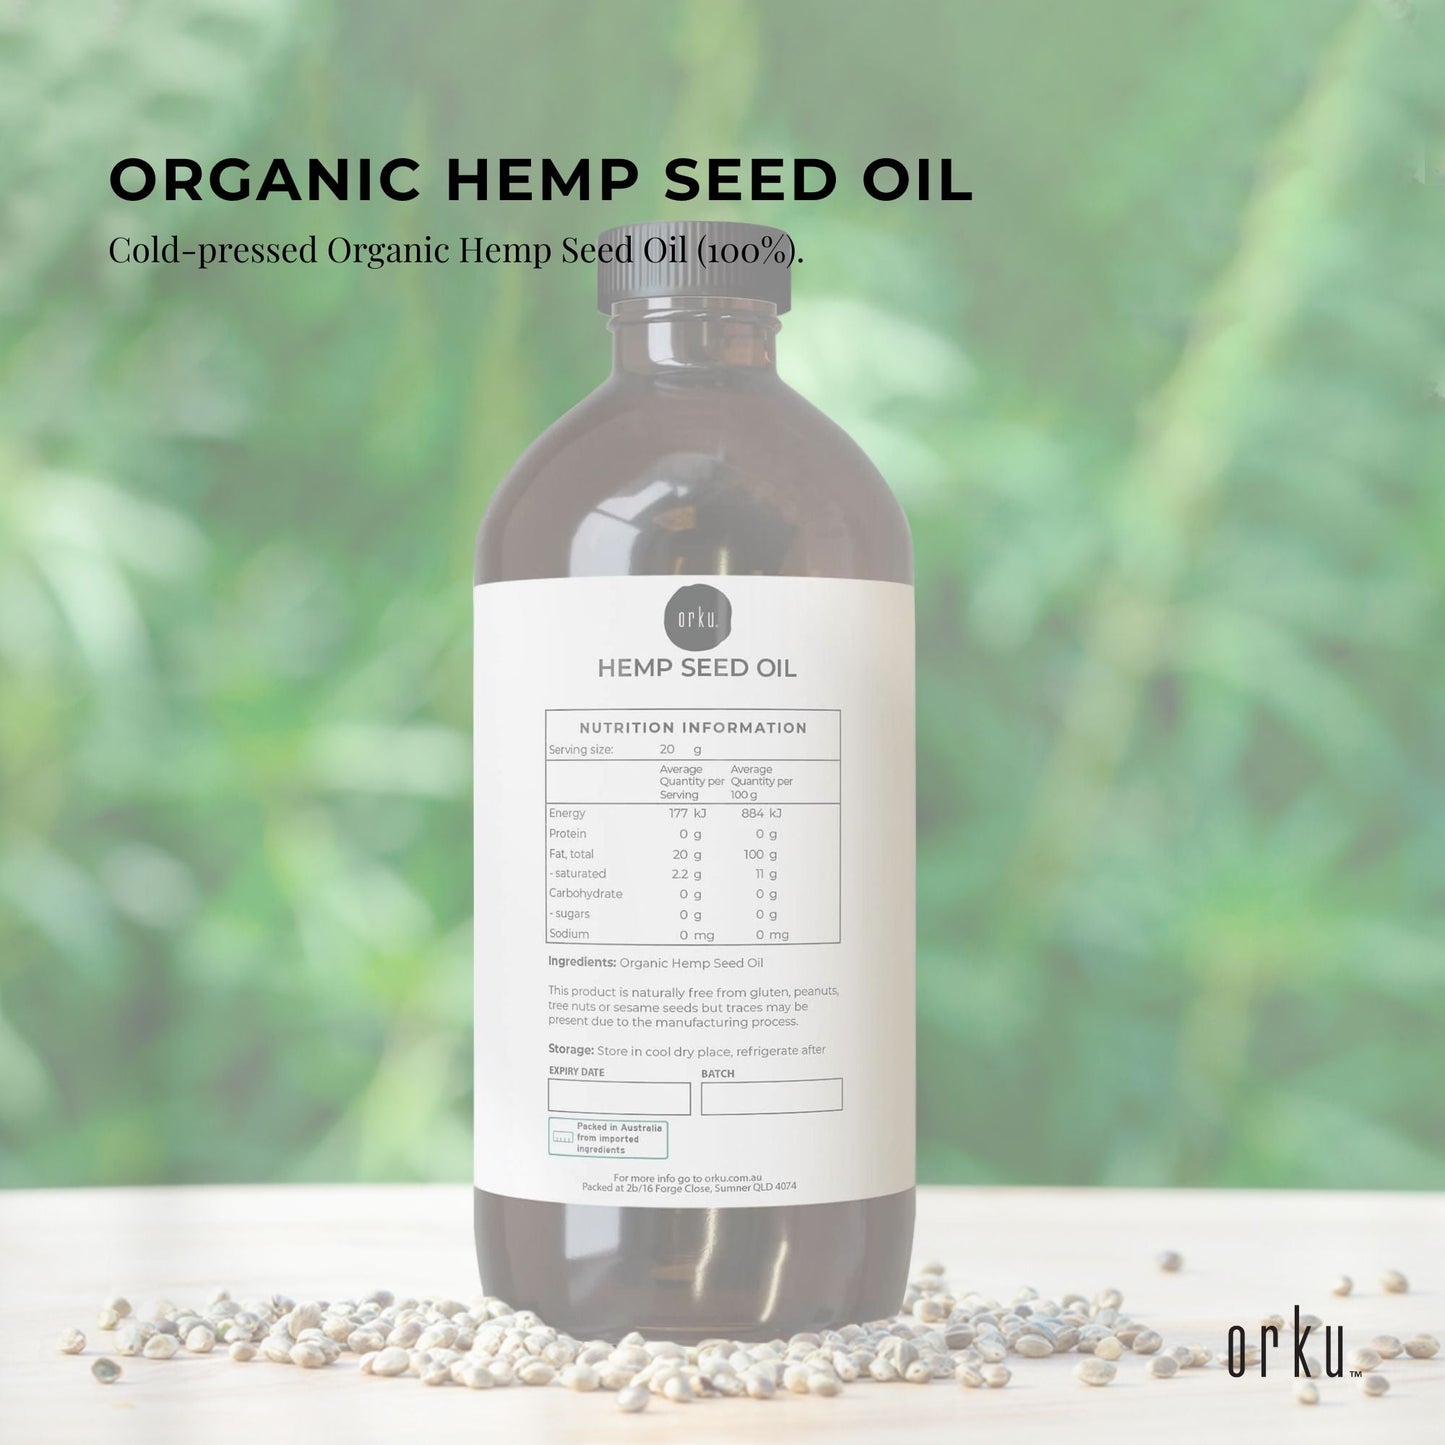 500ml Organic Hemp Seed Oil - Cold Pressed Food Grade Healthy Oils Foods